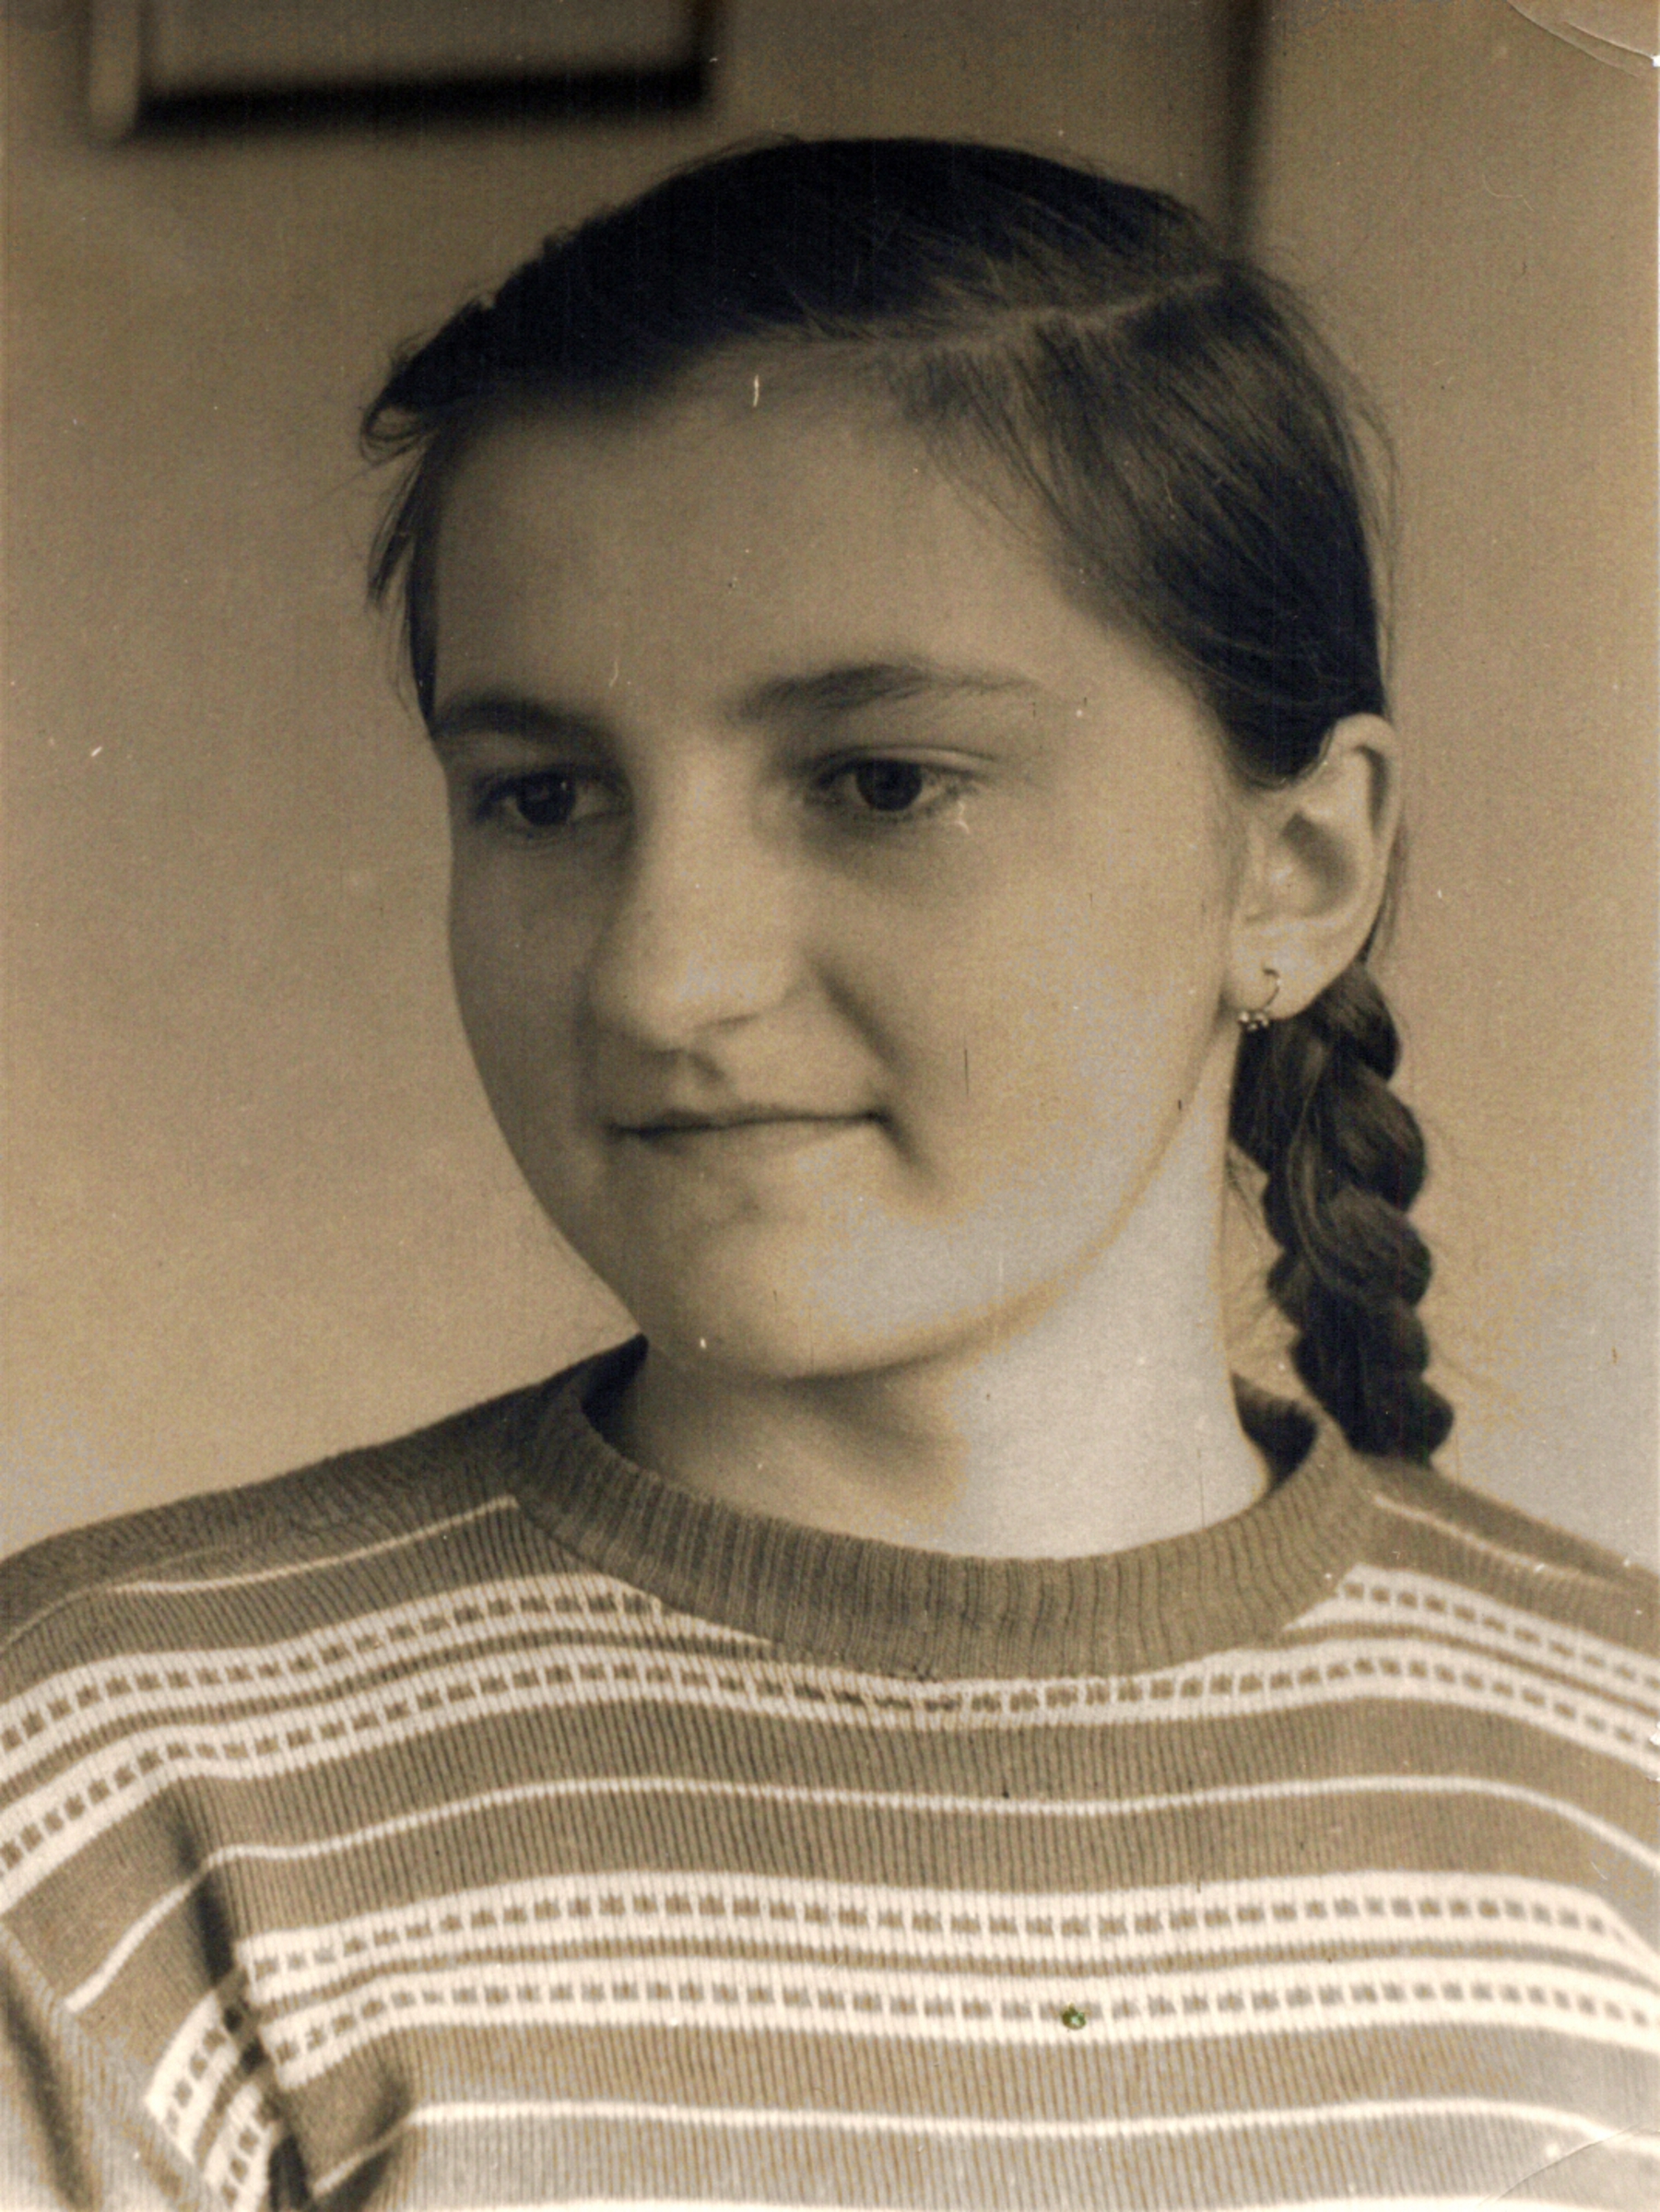 13-year-old Ludmila